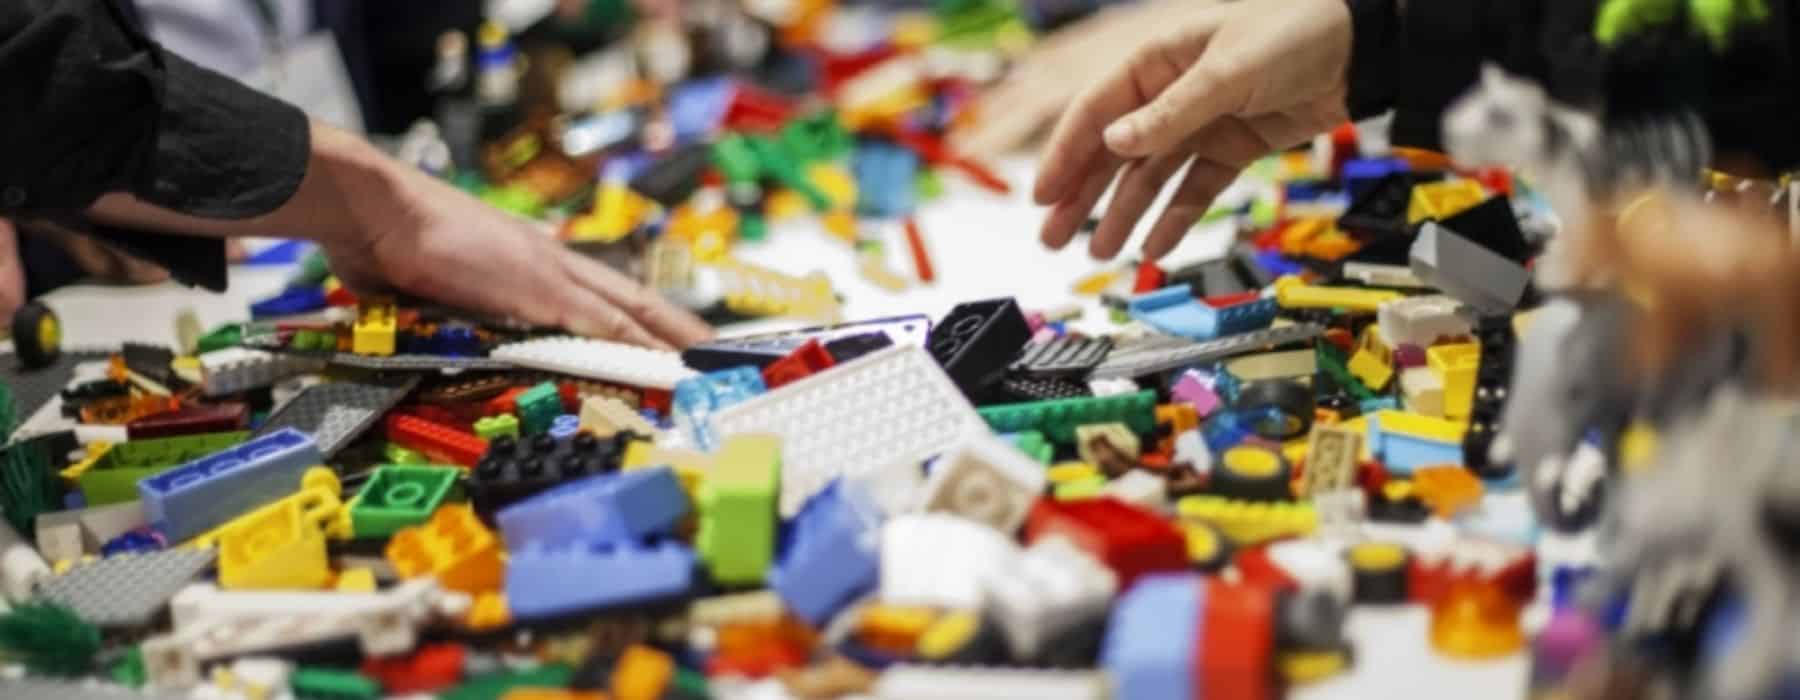 TEAM BUILDING LEGO SERIOUS PLAY